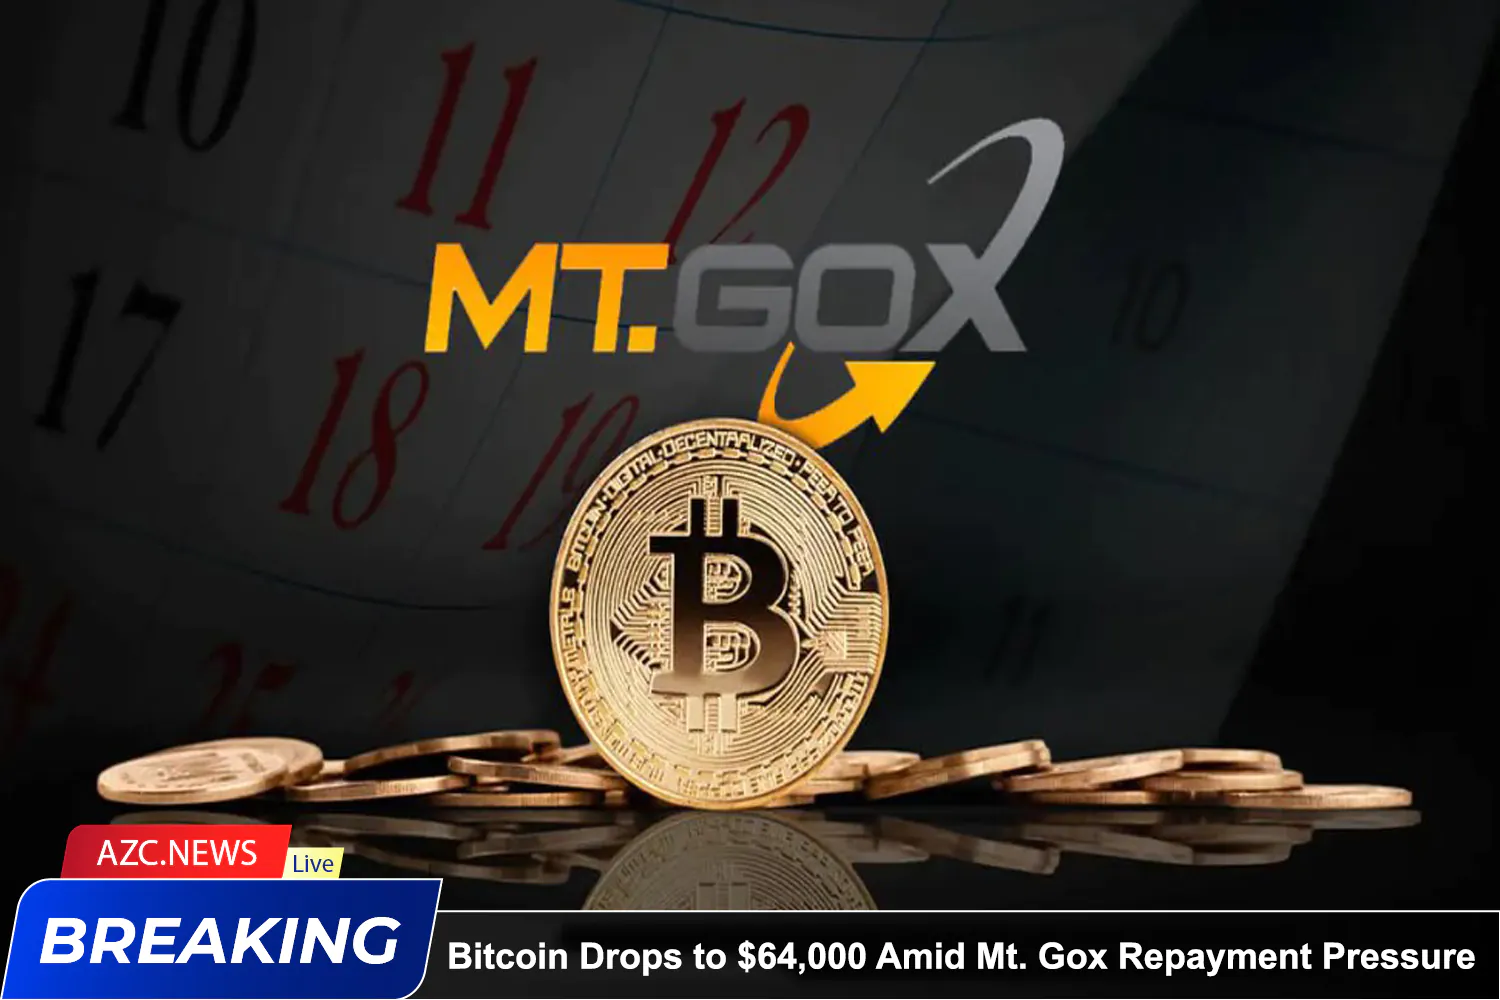 Azcnews Bitcoin Drops To $64,000 Amid Mt. Gox Repayment Pressure